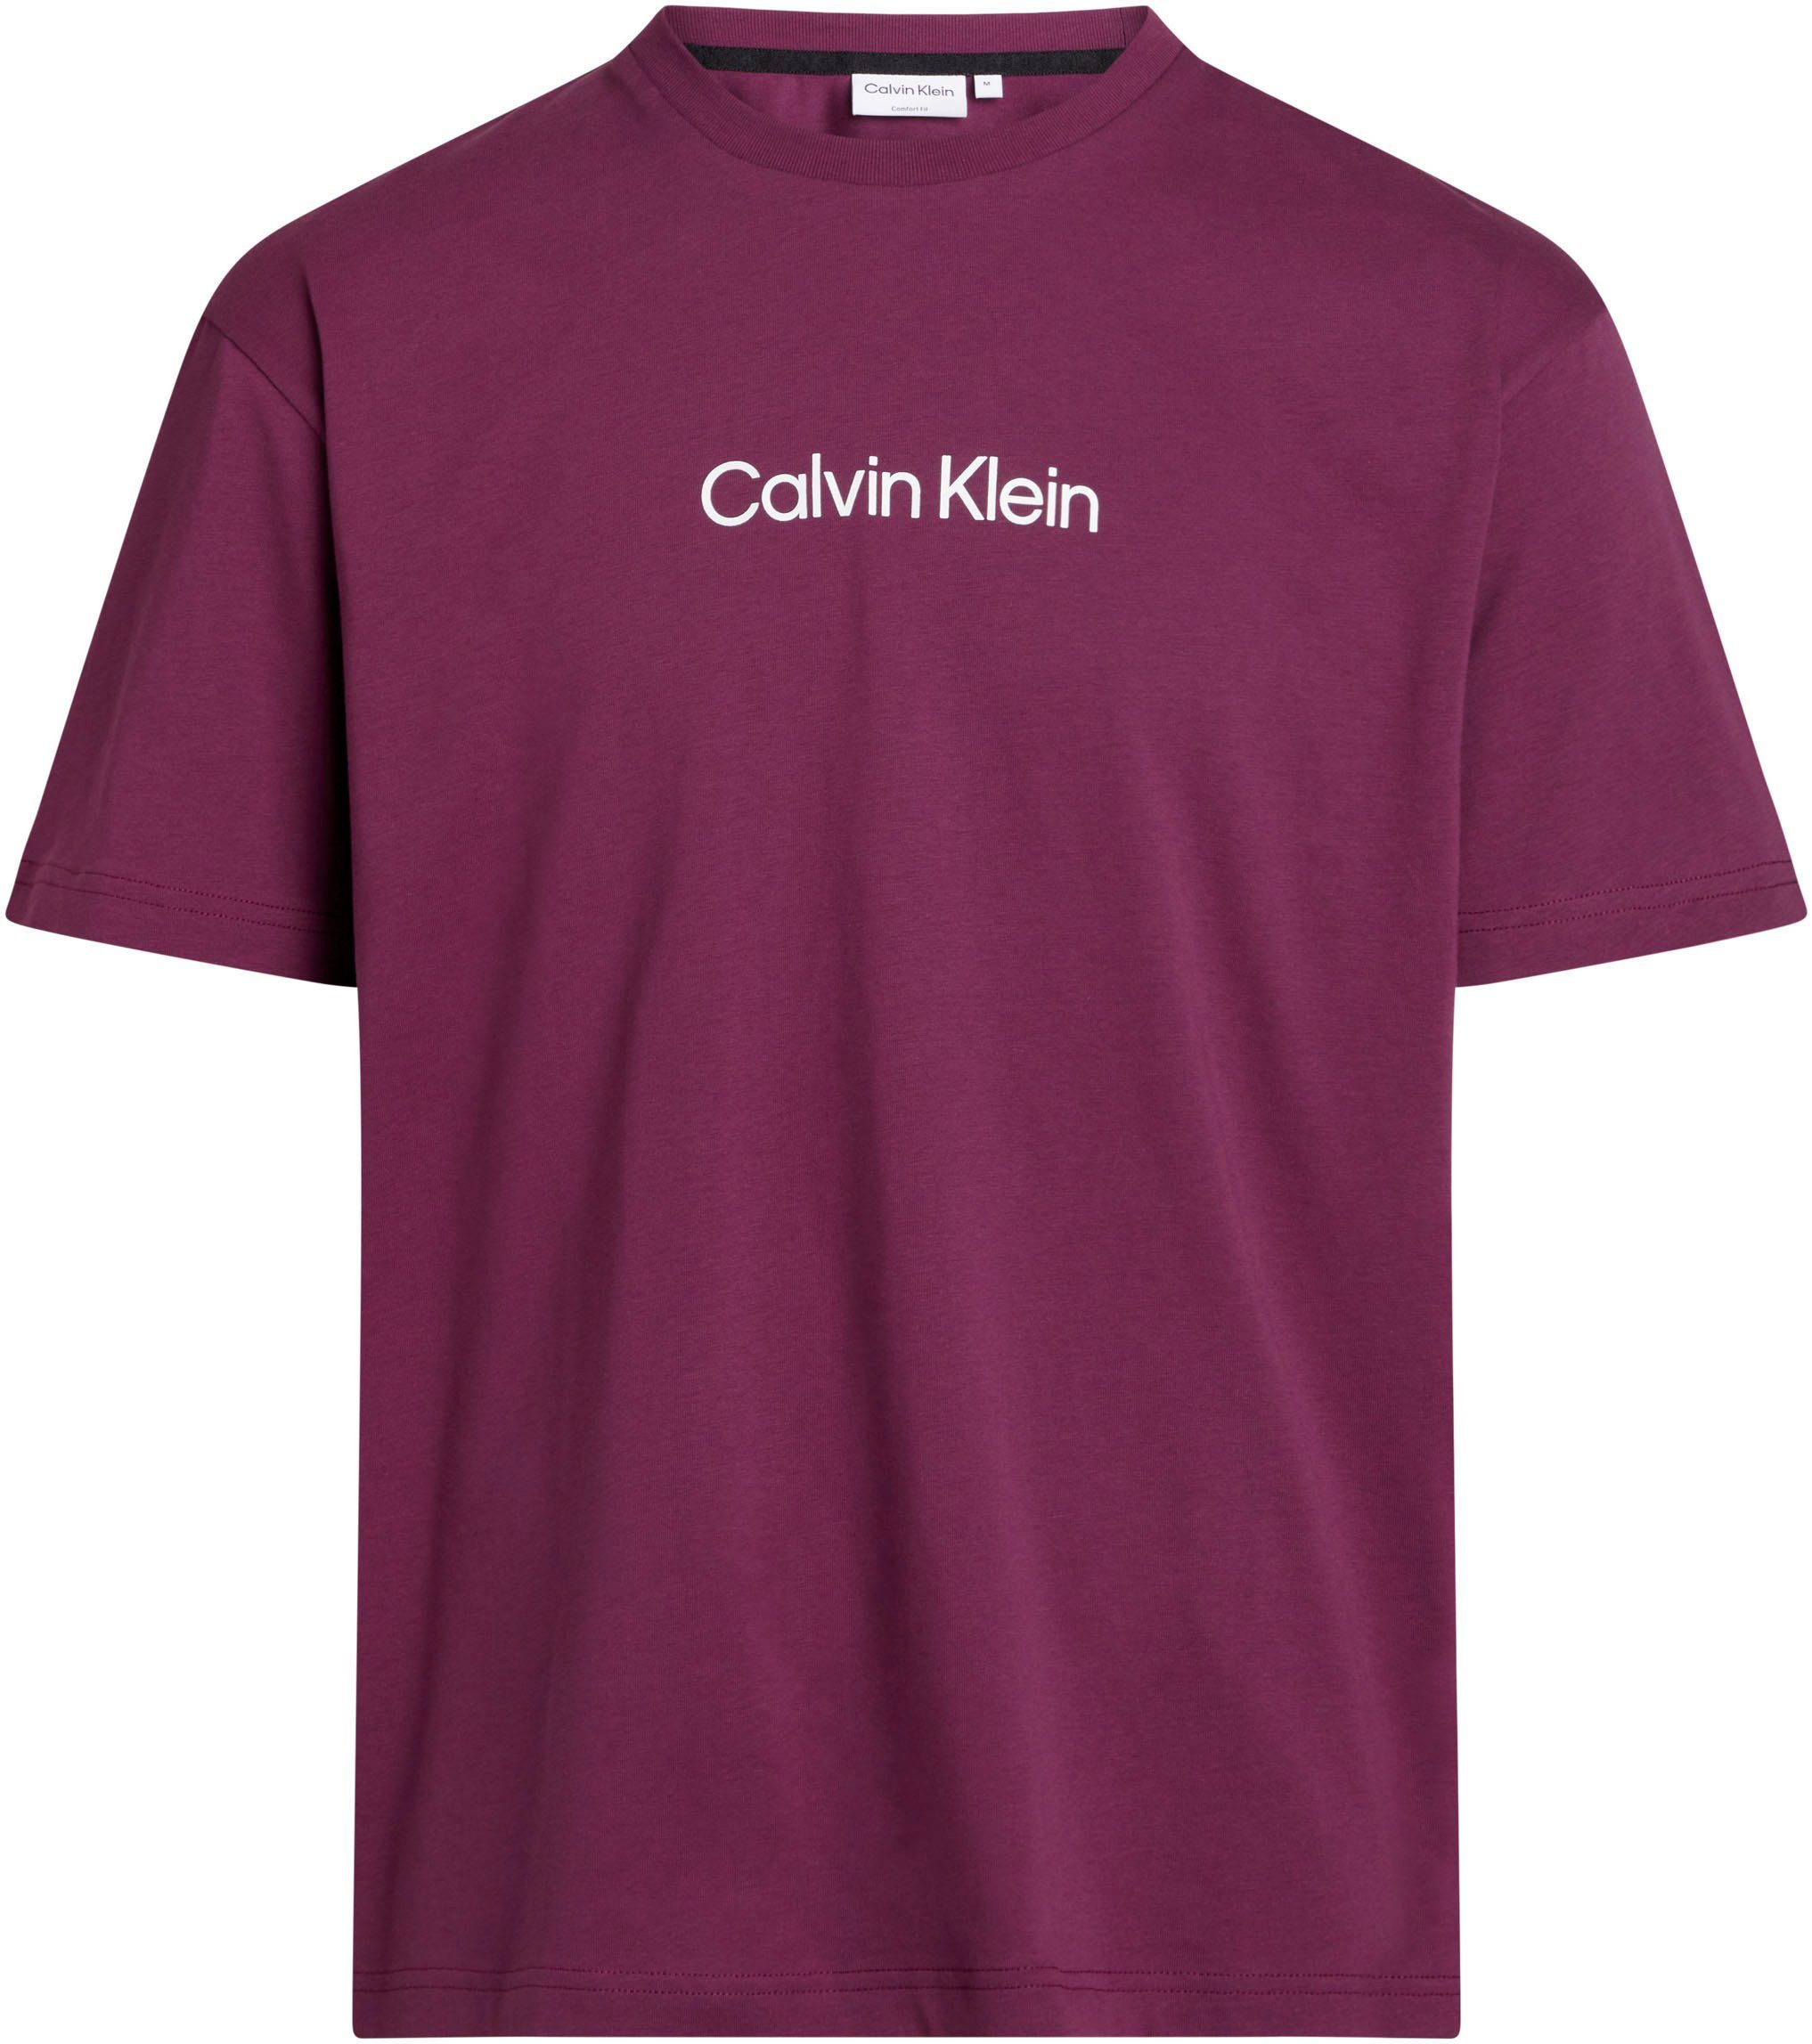 T-Shirt T-SHIRT HERO Klein Calvin mit COMFORT Italian aufgedrucktem Markenlabel Plum LOGO